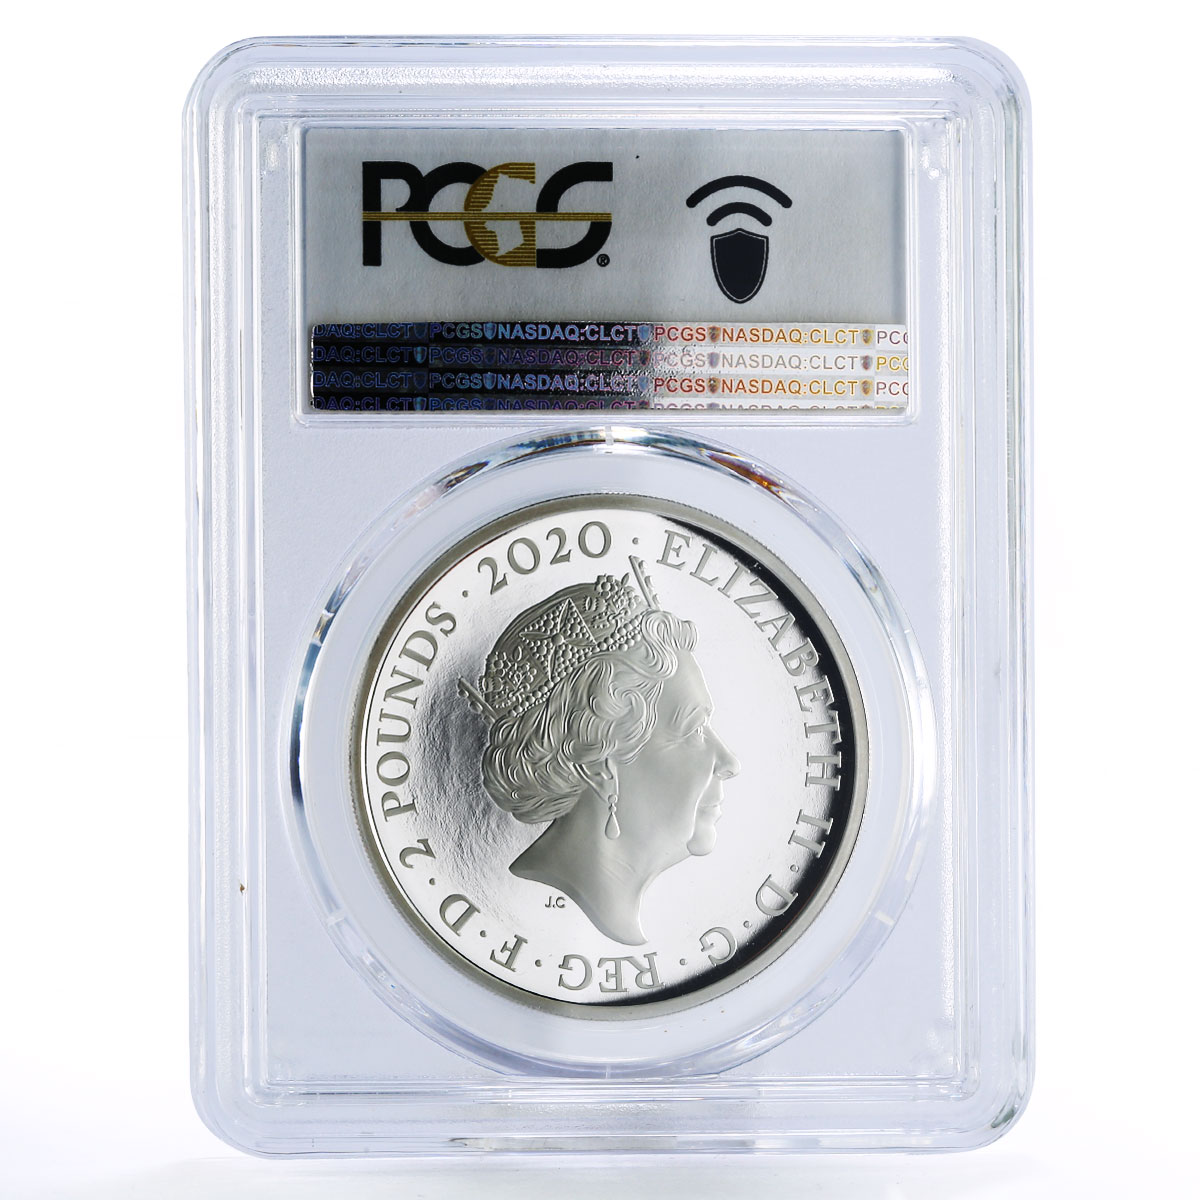 Britain 2 pounds Bondiana series James Bond's Car PR69 PCGS silver coin 2020